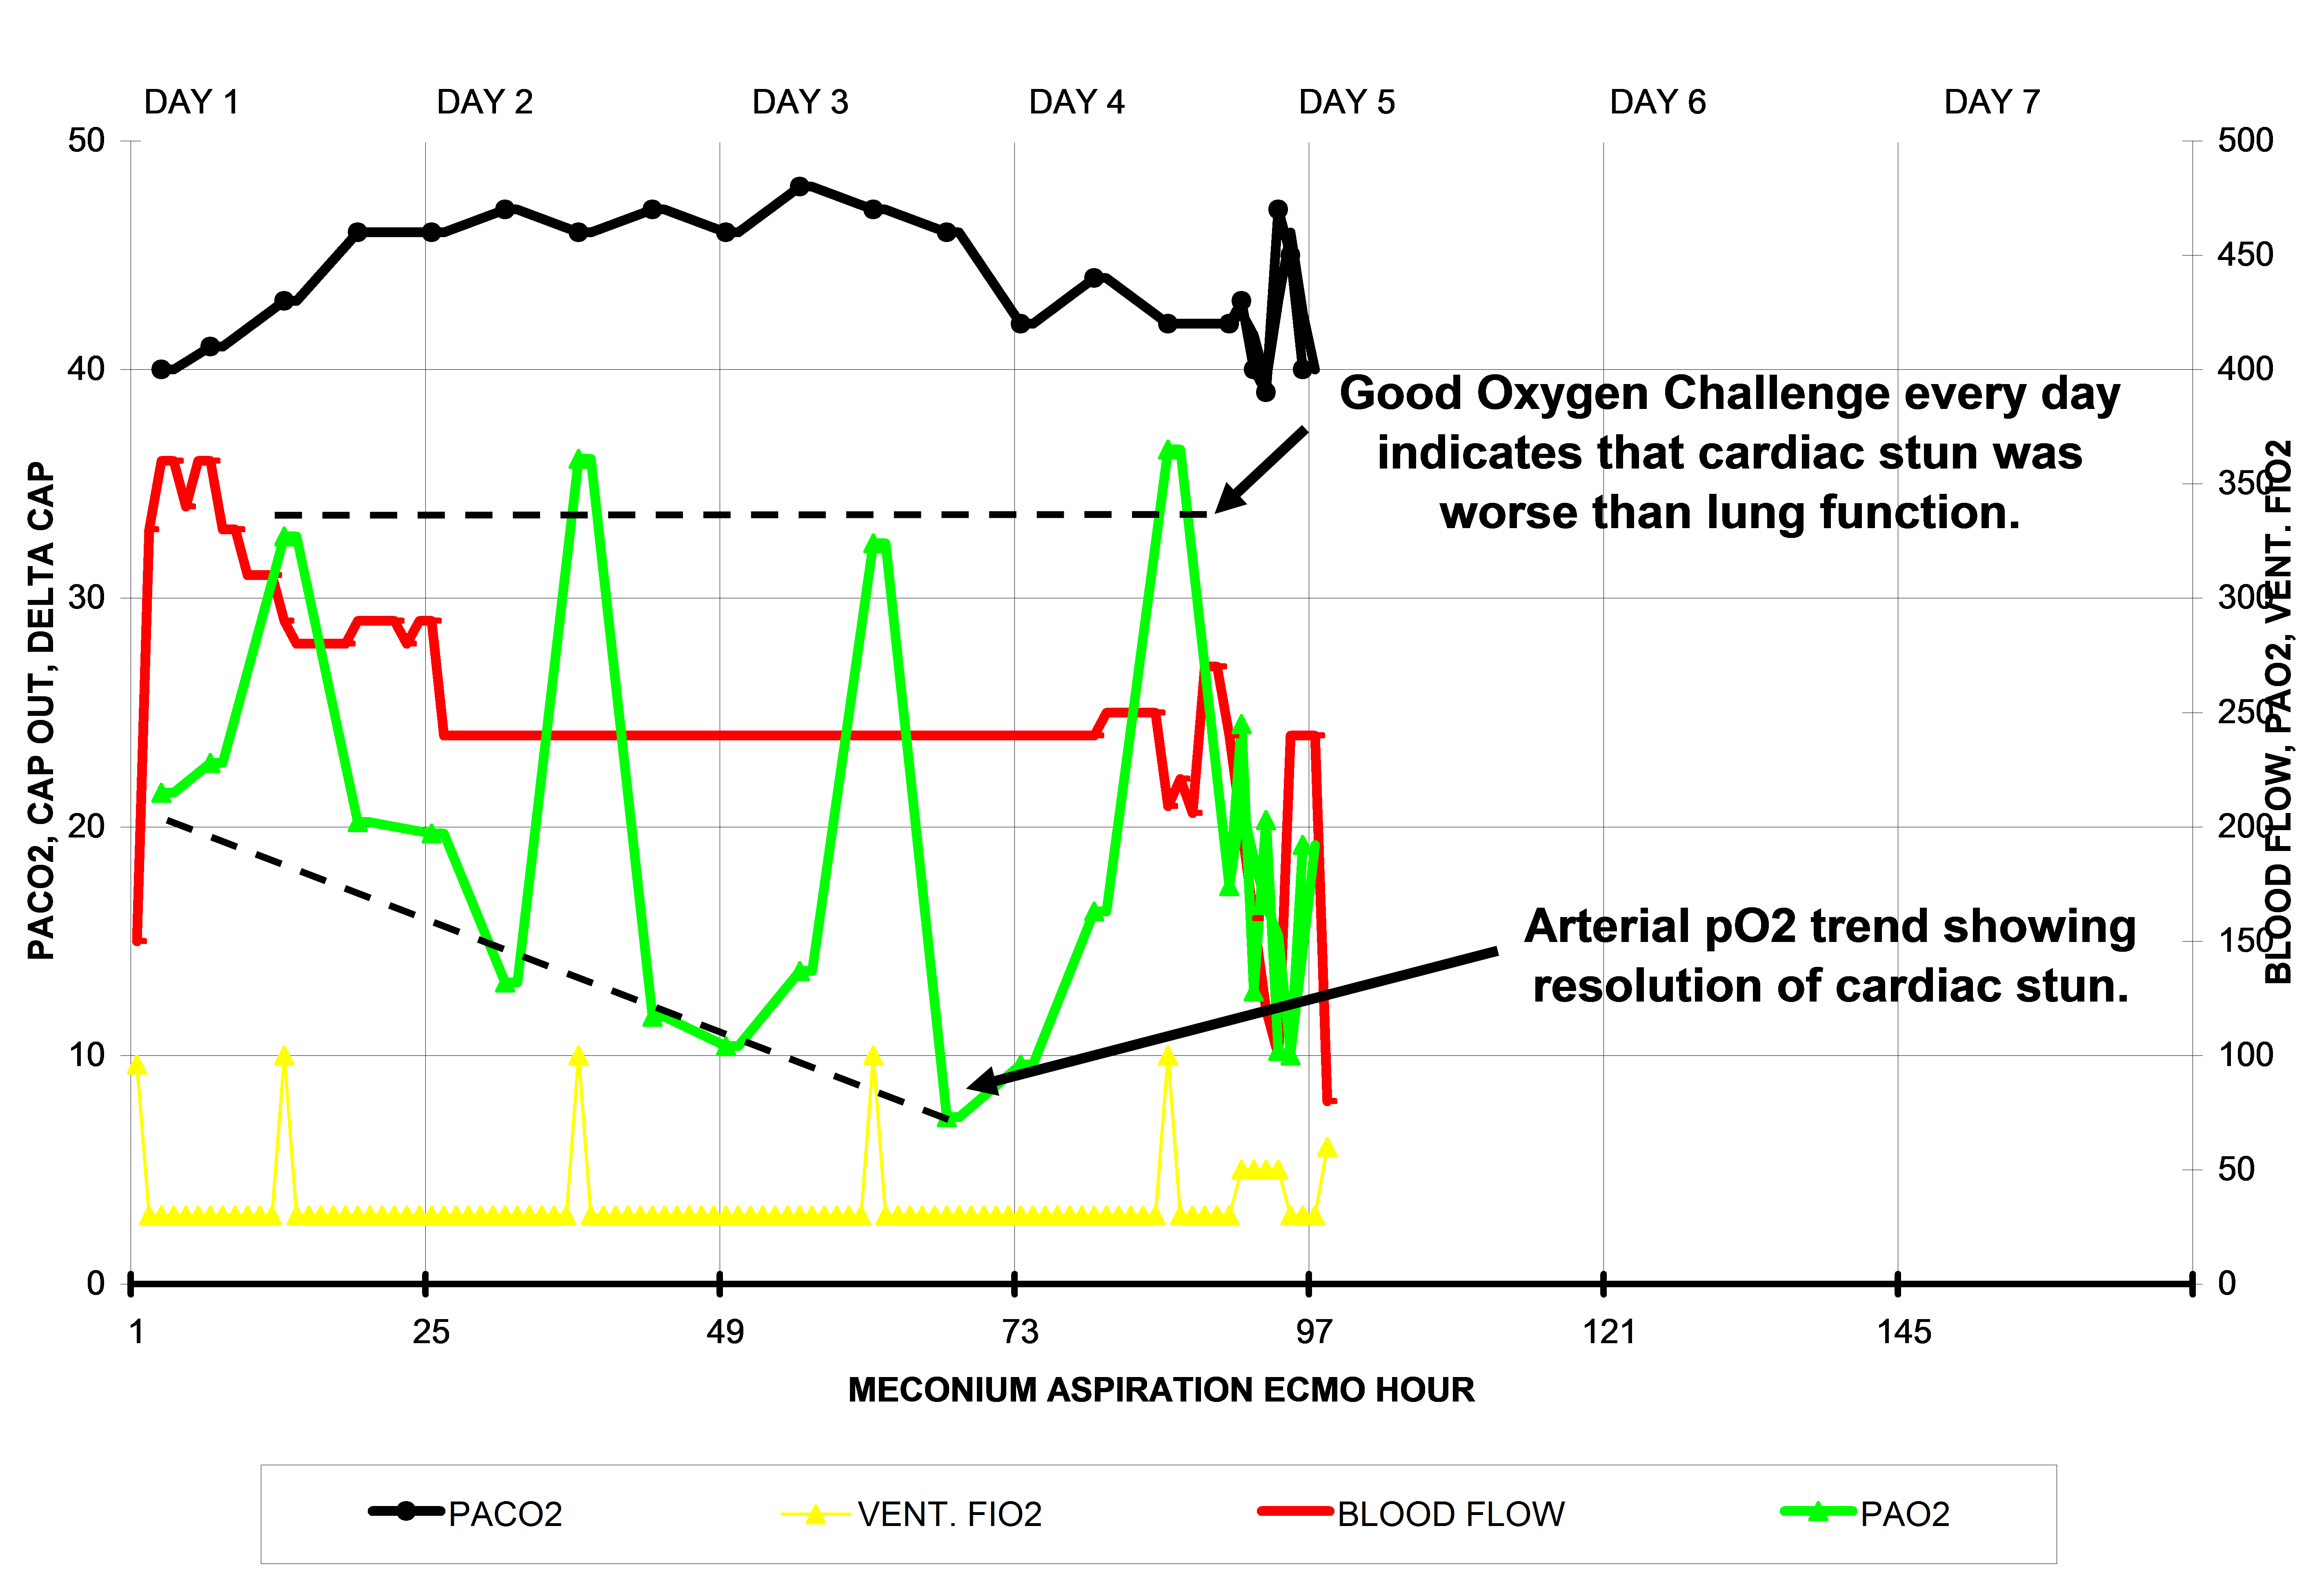 Oxygen challenge with cardiac stun